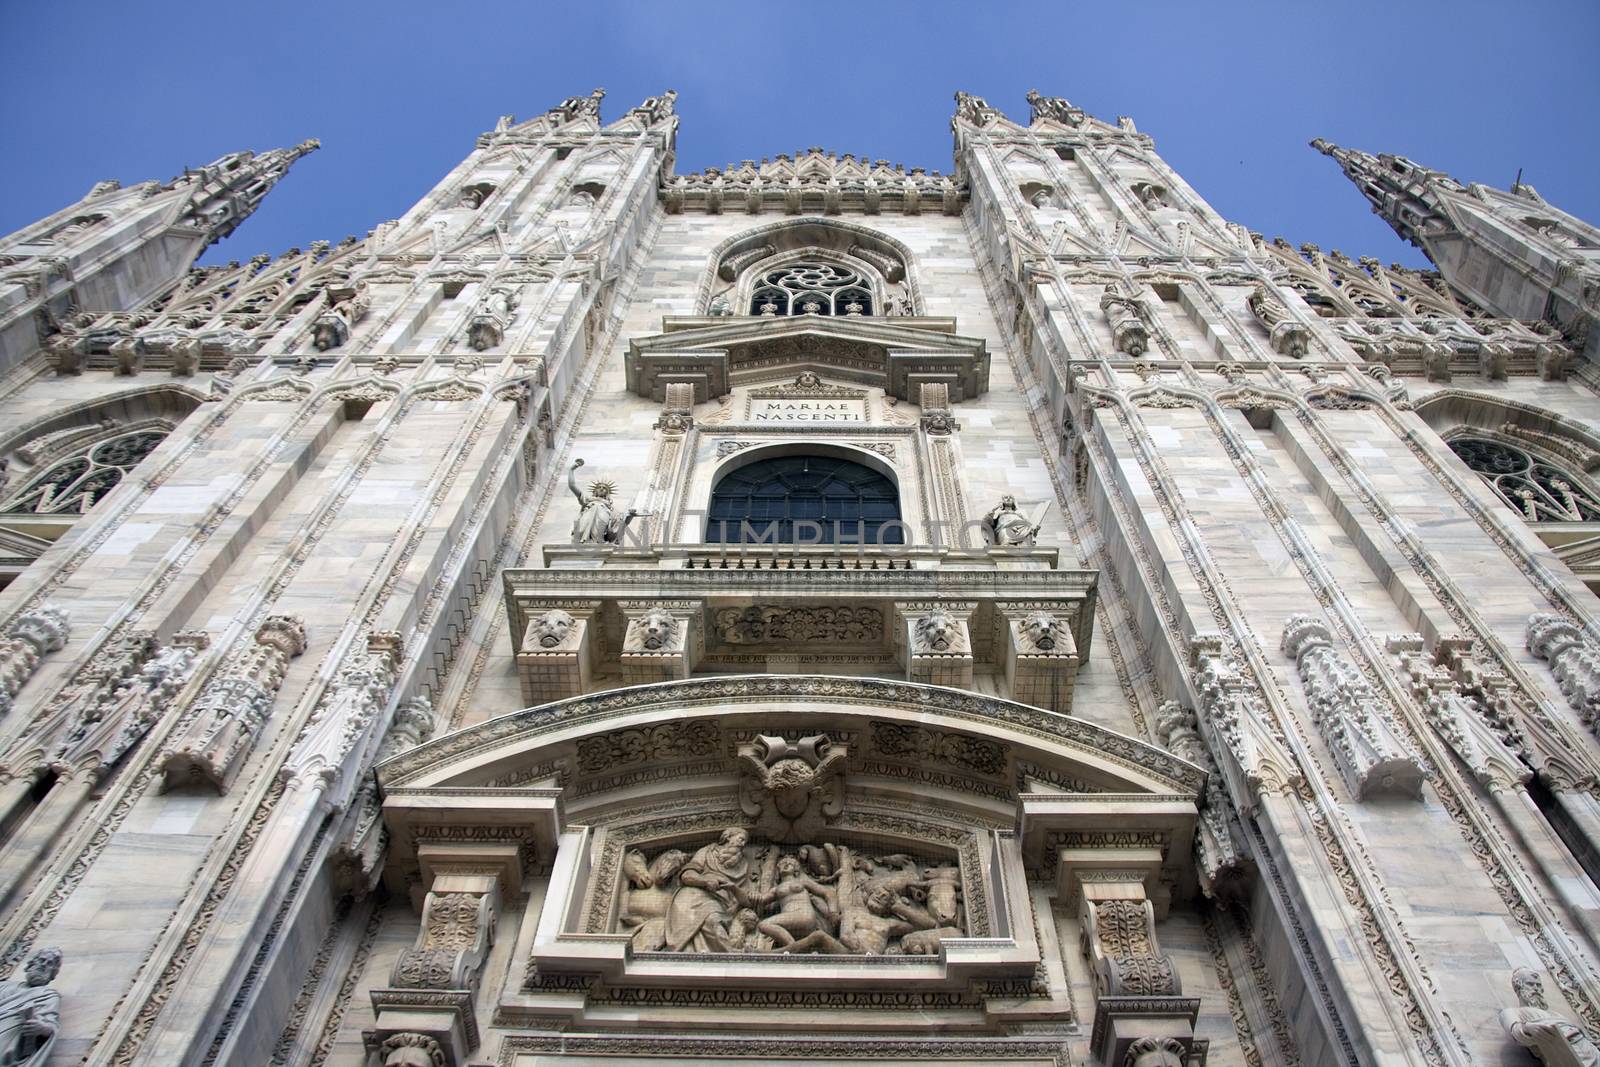 Facade of Duomo cathedral in Milan, Italy  by fotoecho